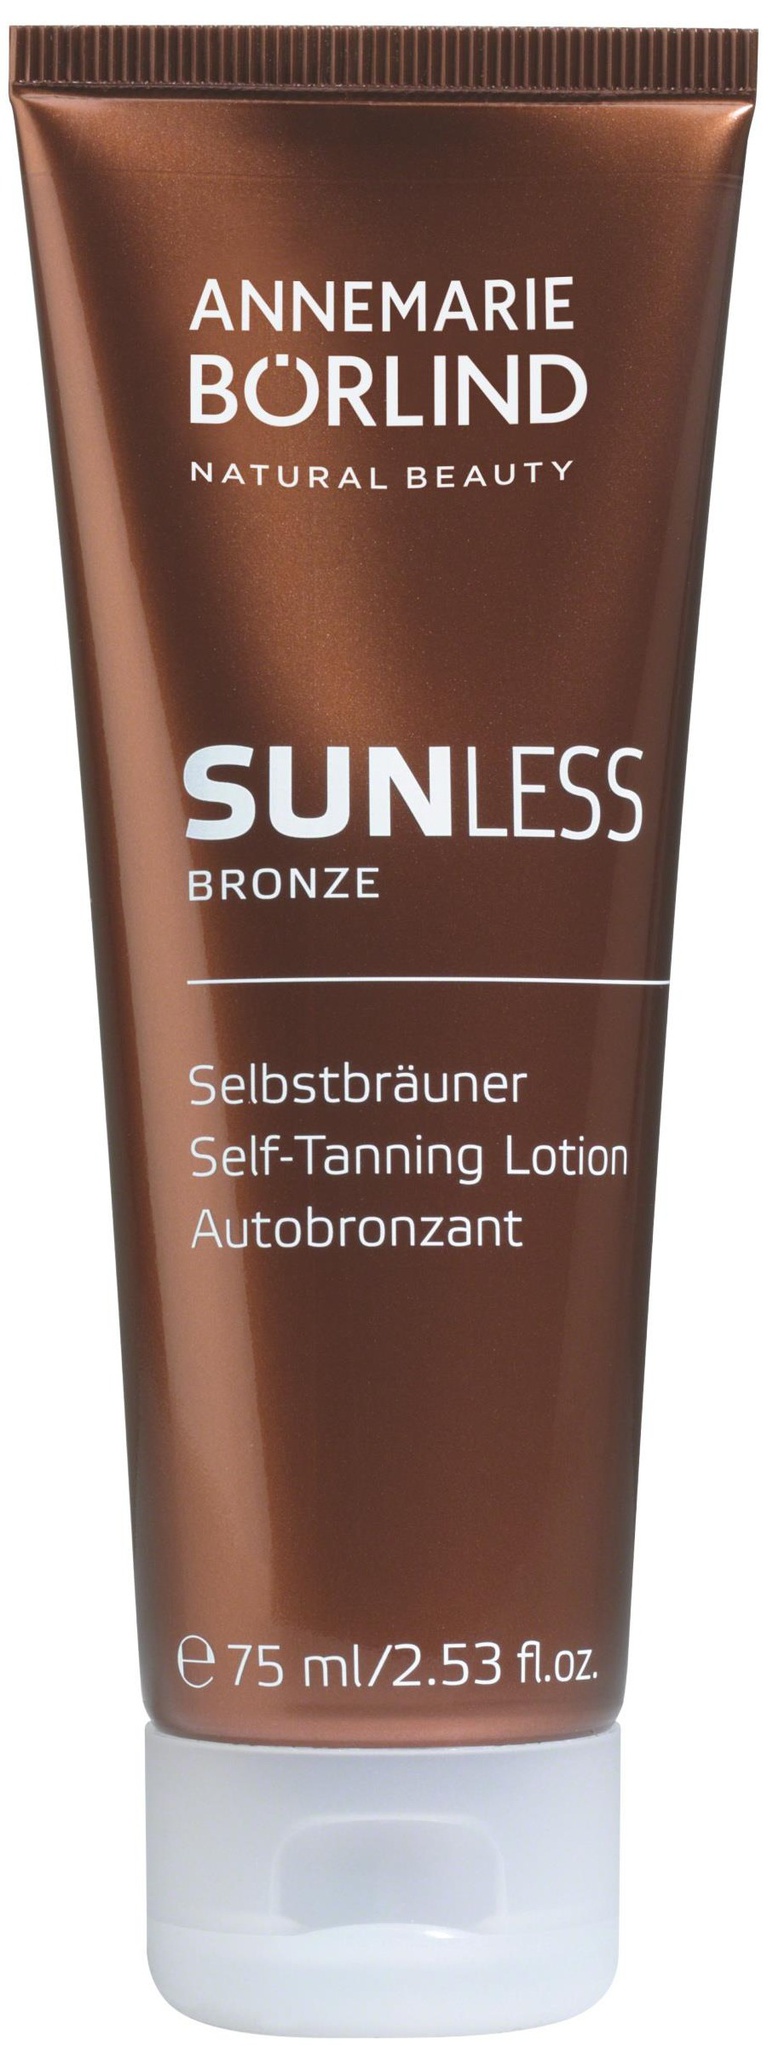 Annemarie Börlind Sunless Bronze Self-Tanning Lotion